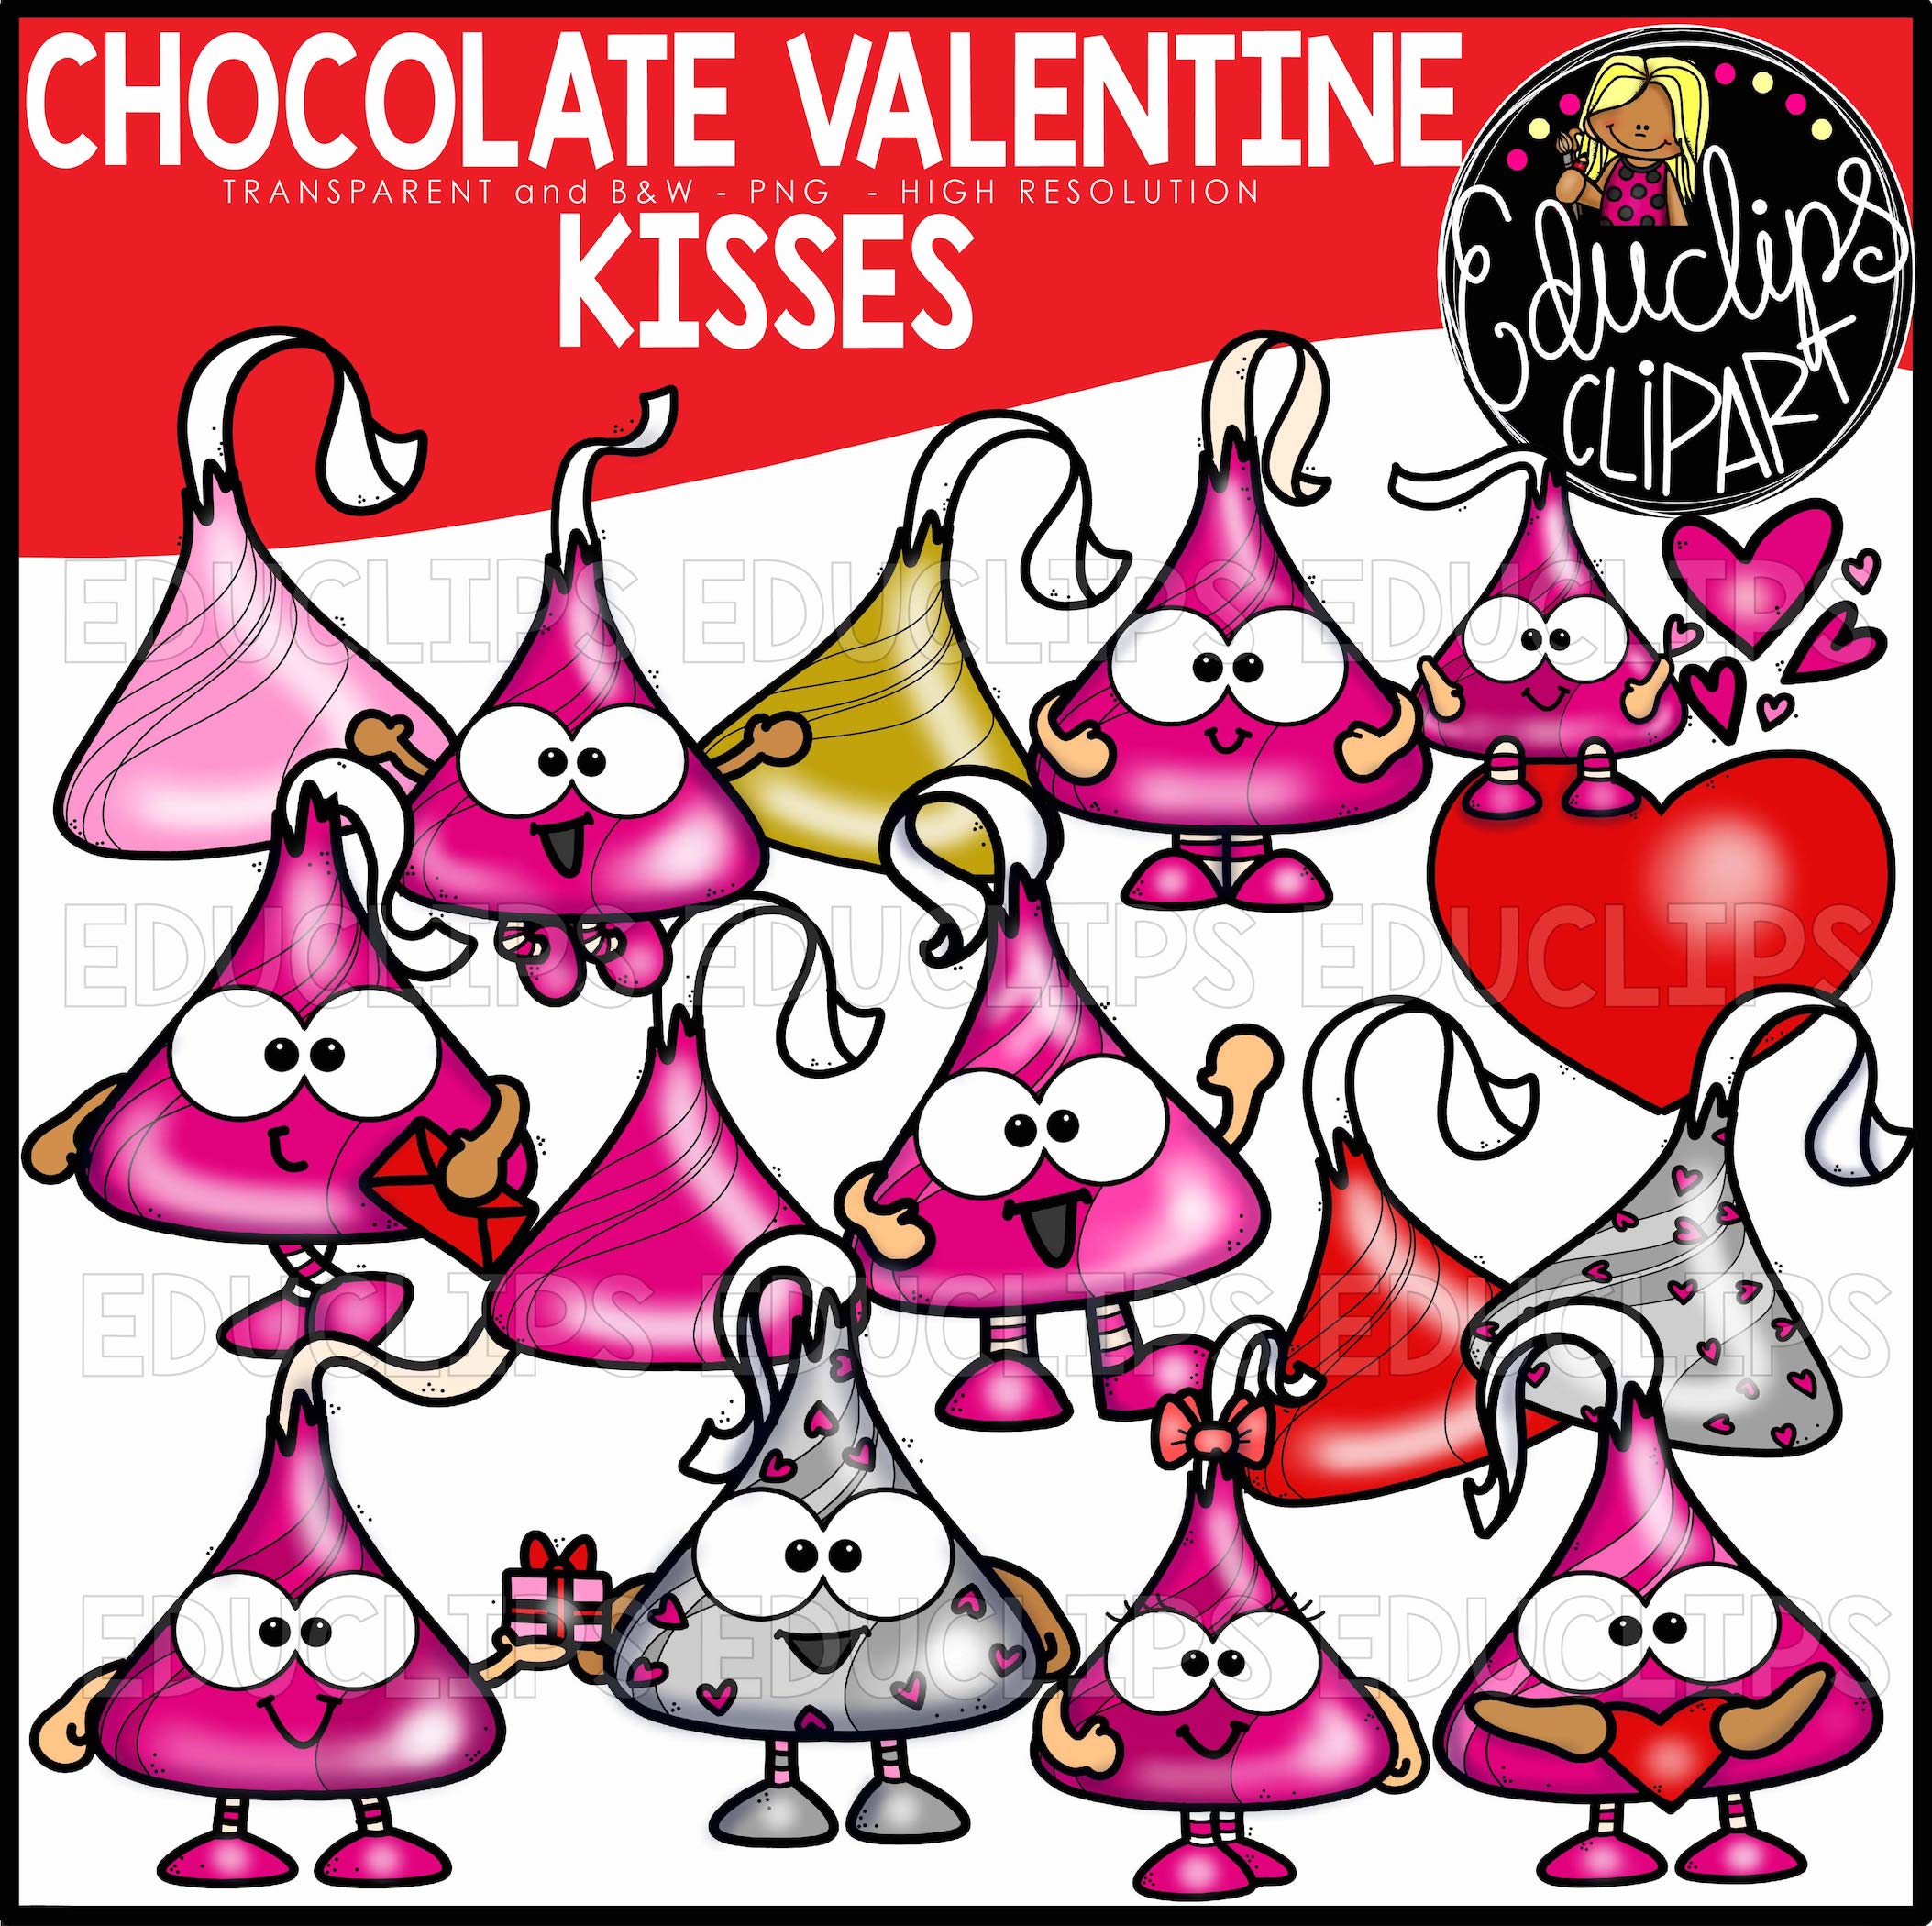 chocolate kisss - Clip Art Library